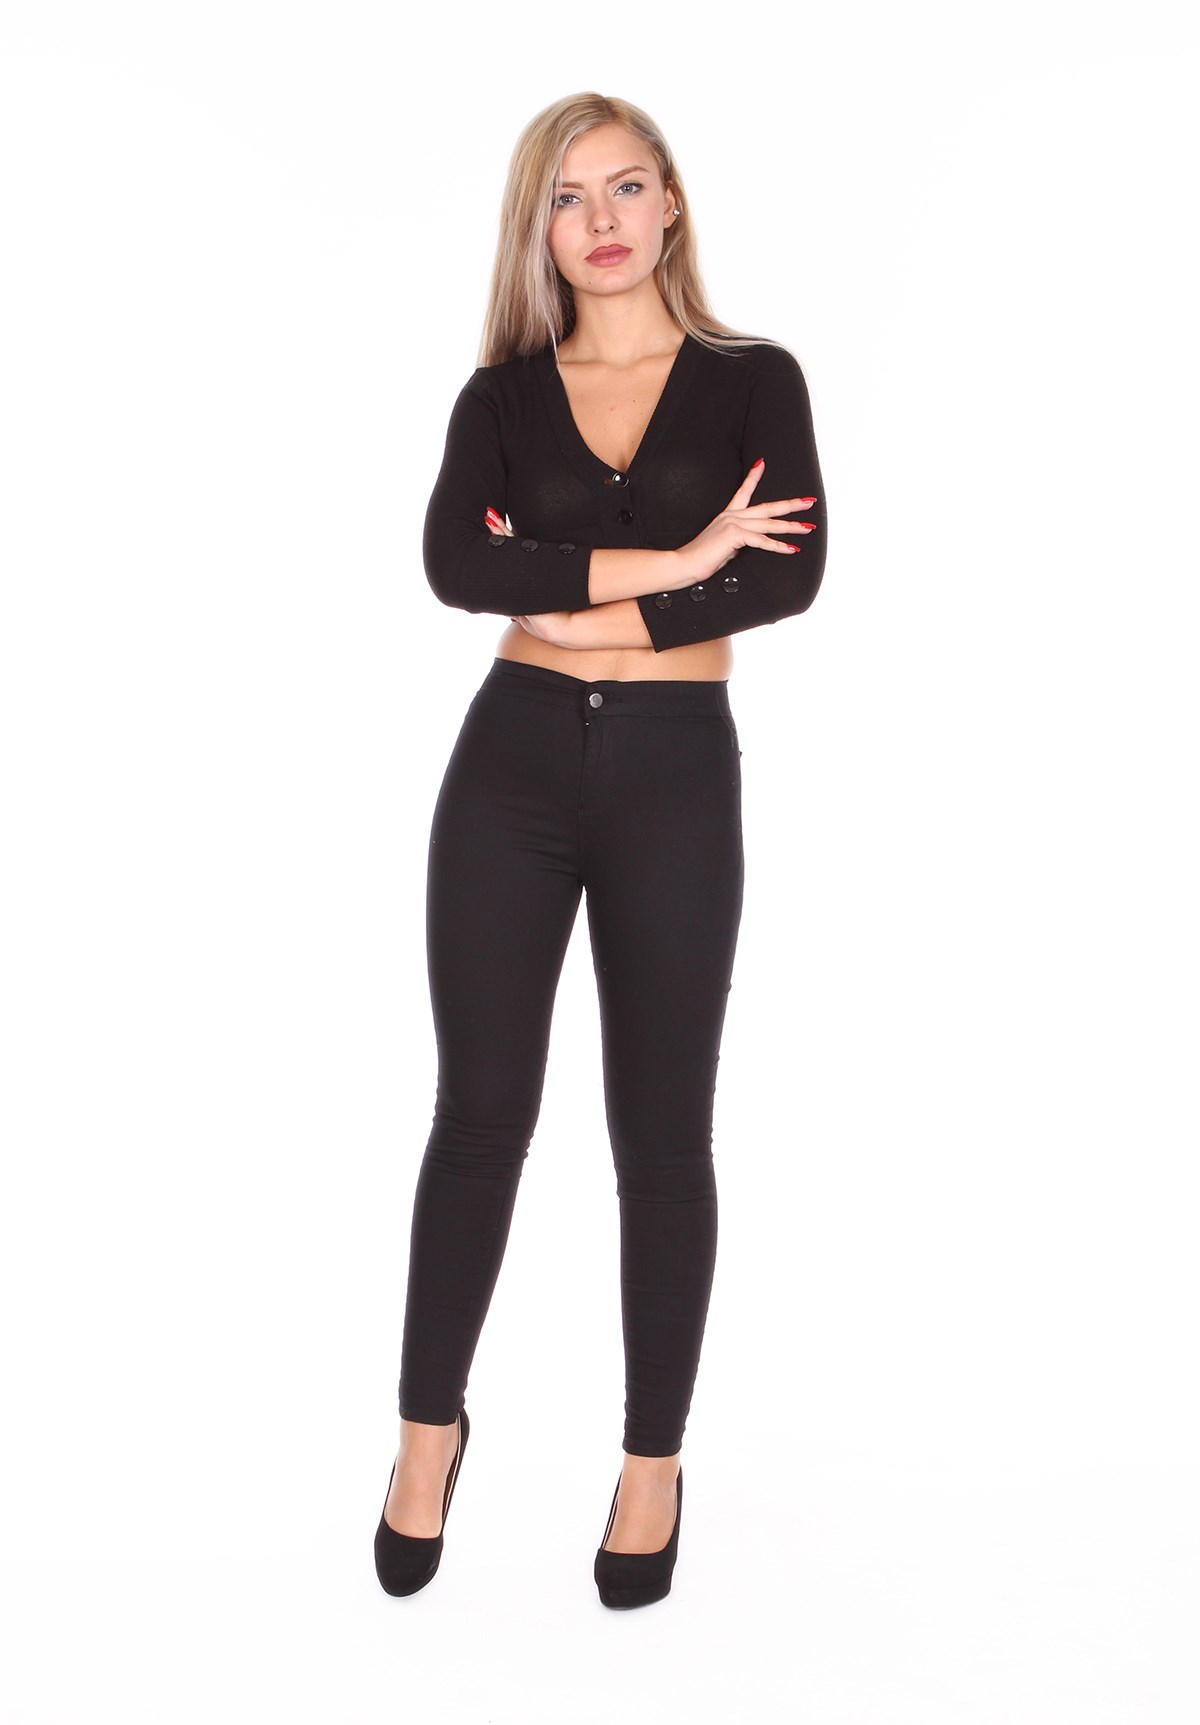 Tayt Model Siyah Renk Likralı Bayan Kot Pantolon - 2860